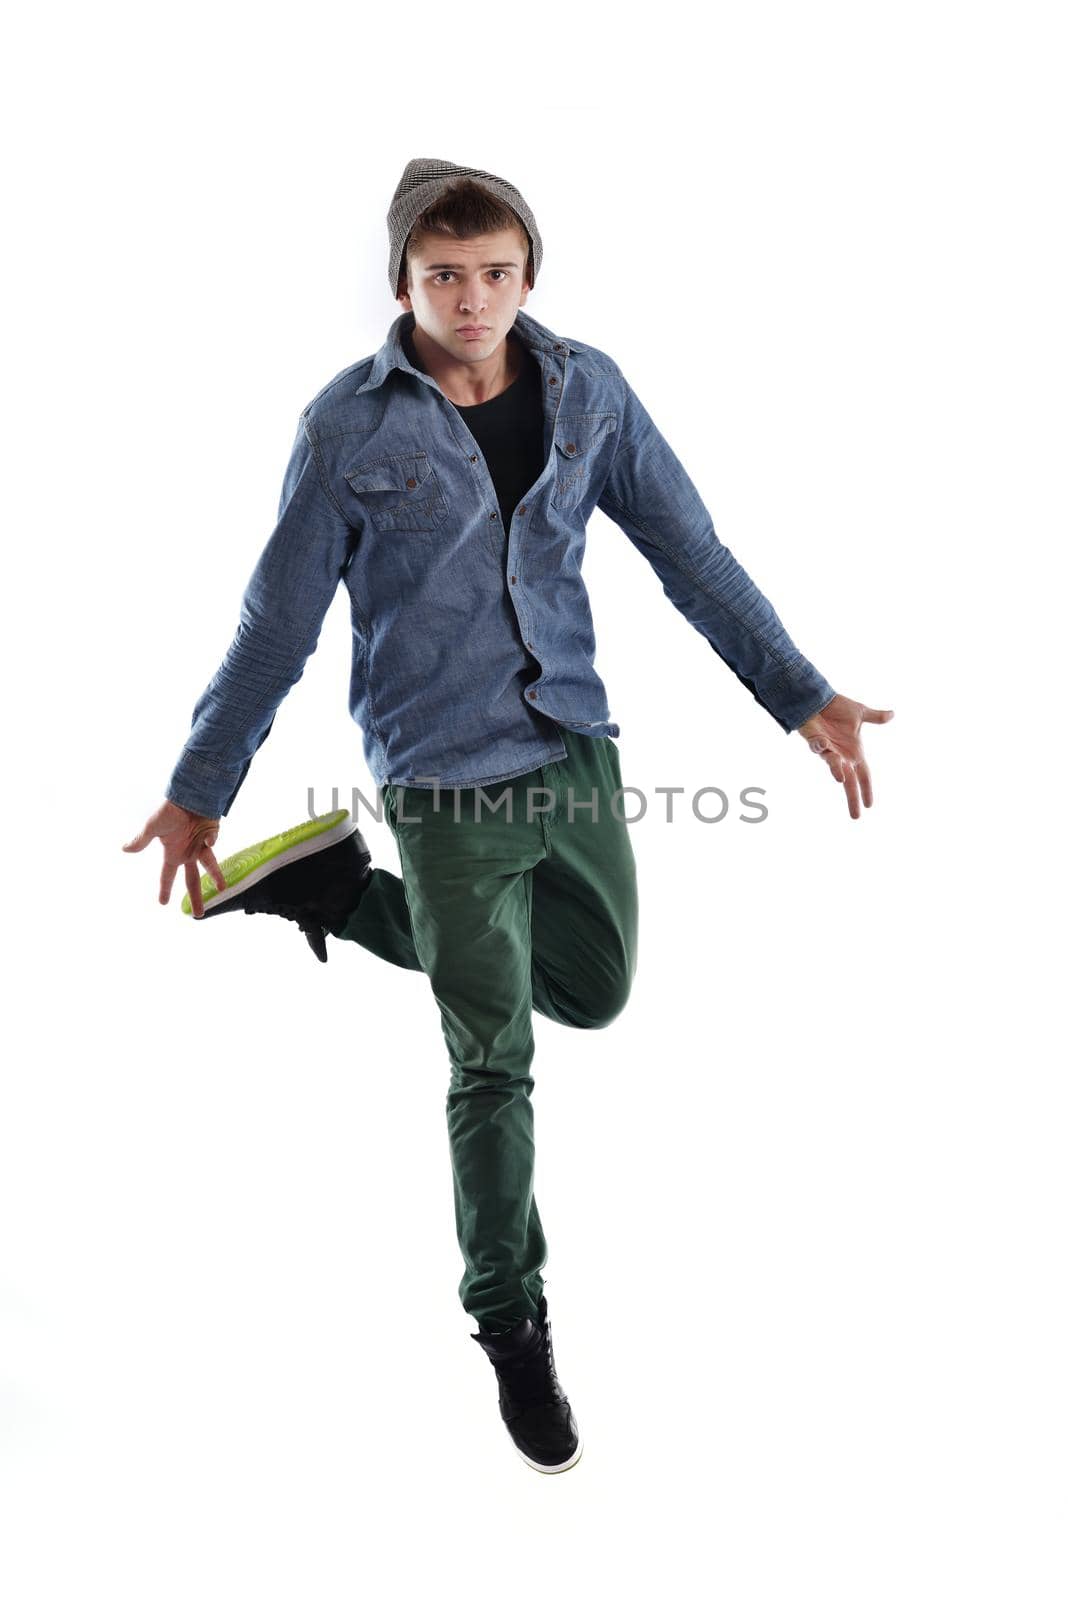 young man dancing by dotshock